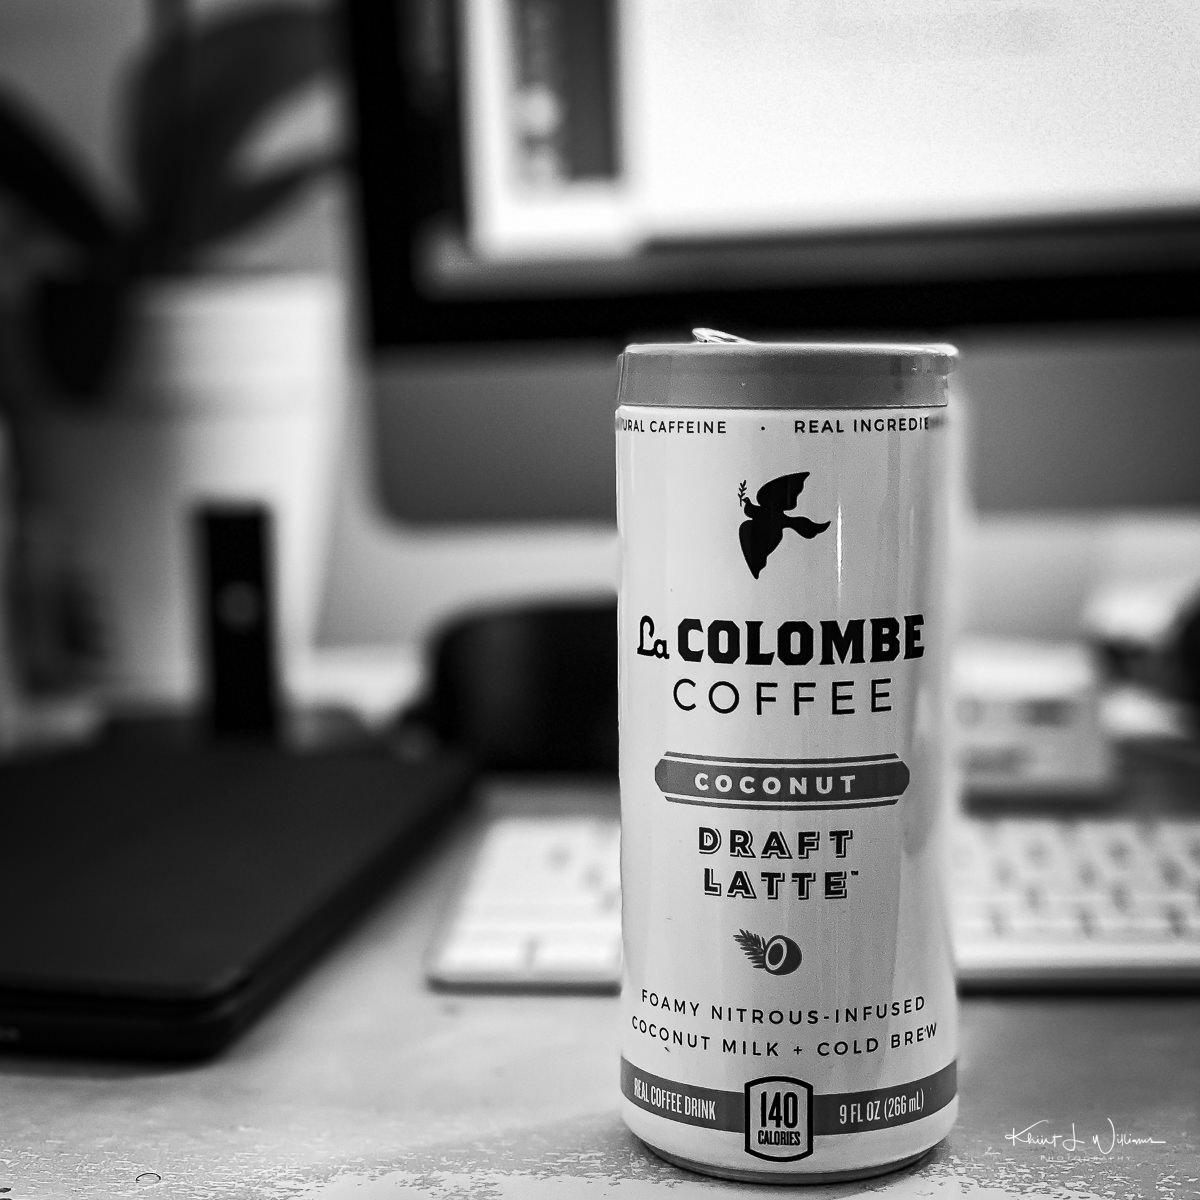 La Colombe Coffee Coconut Draft Latte